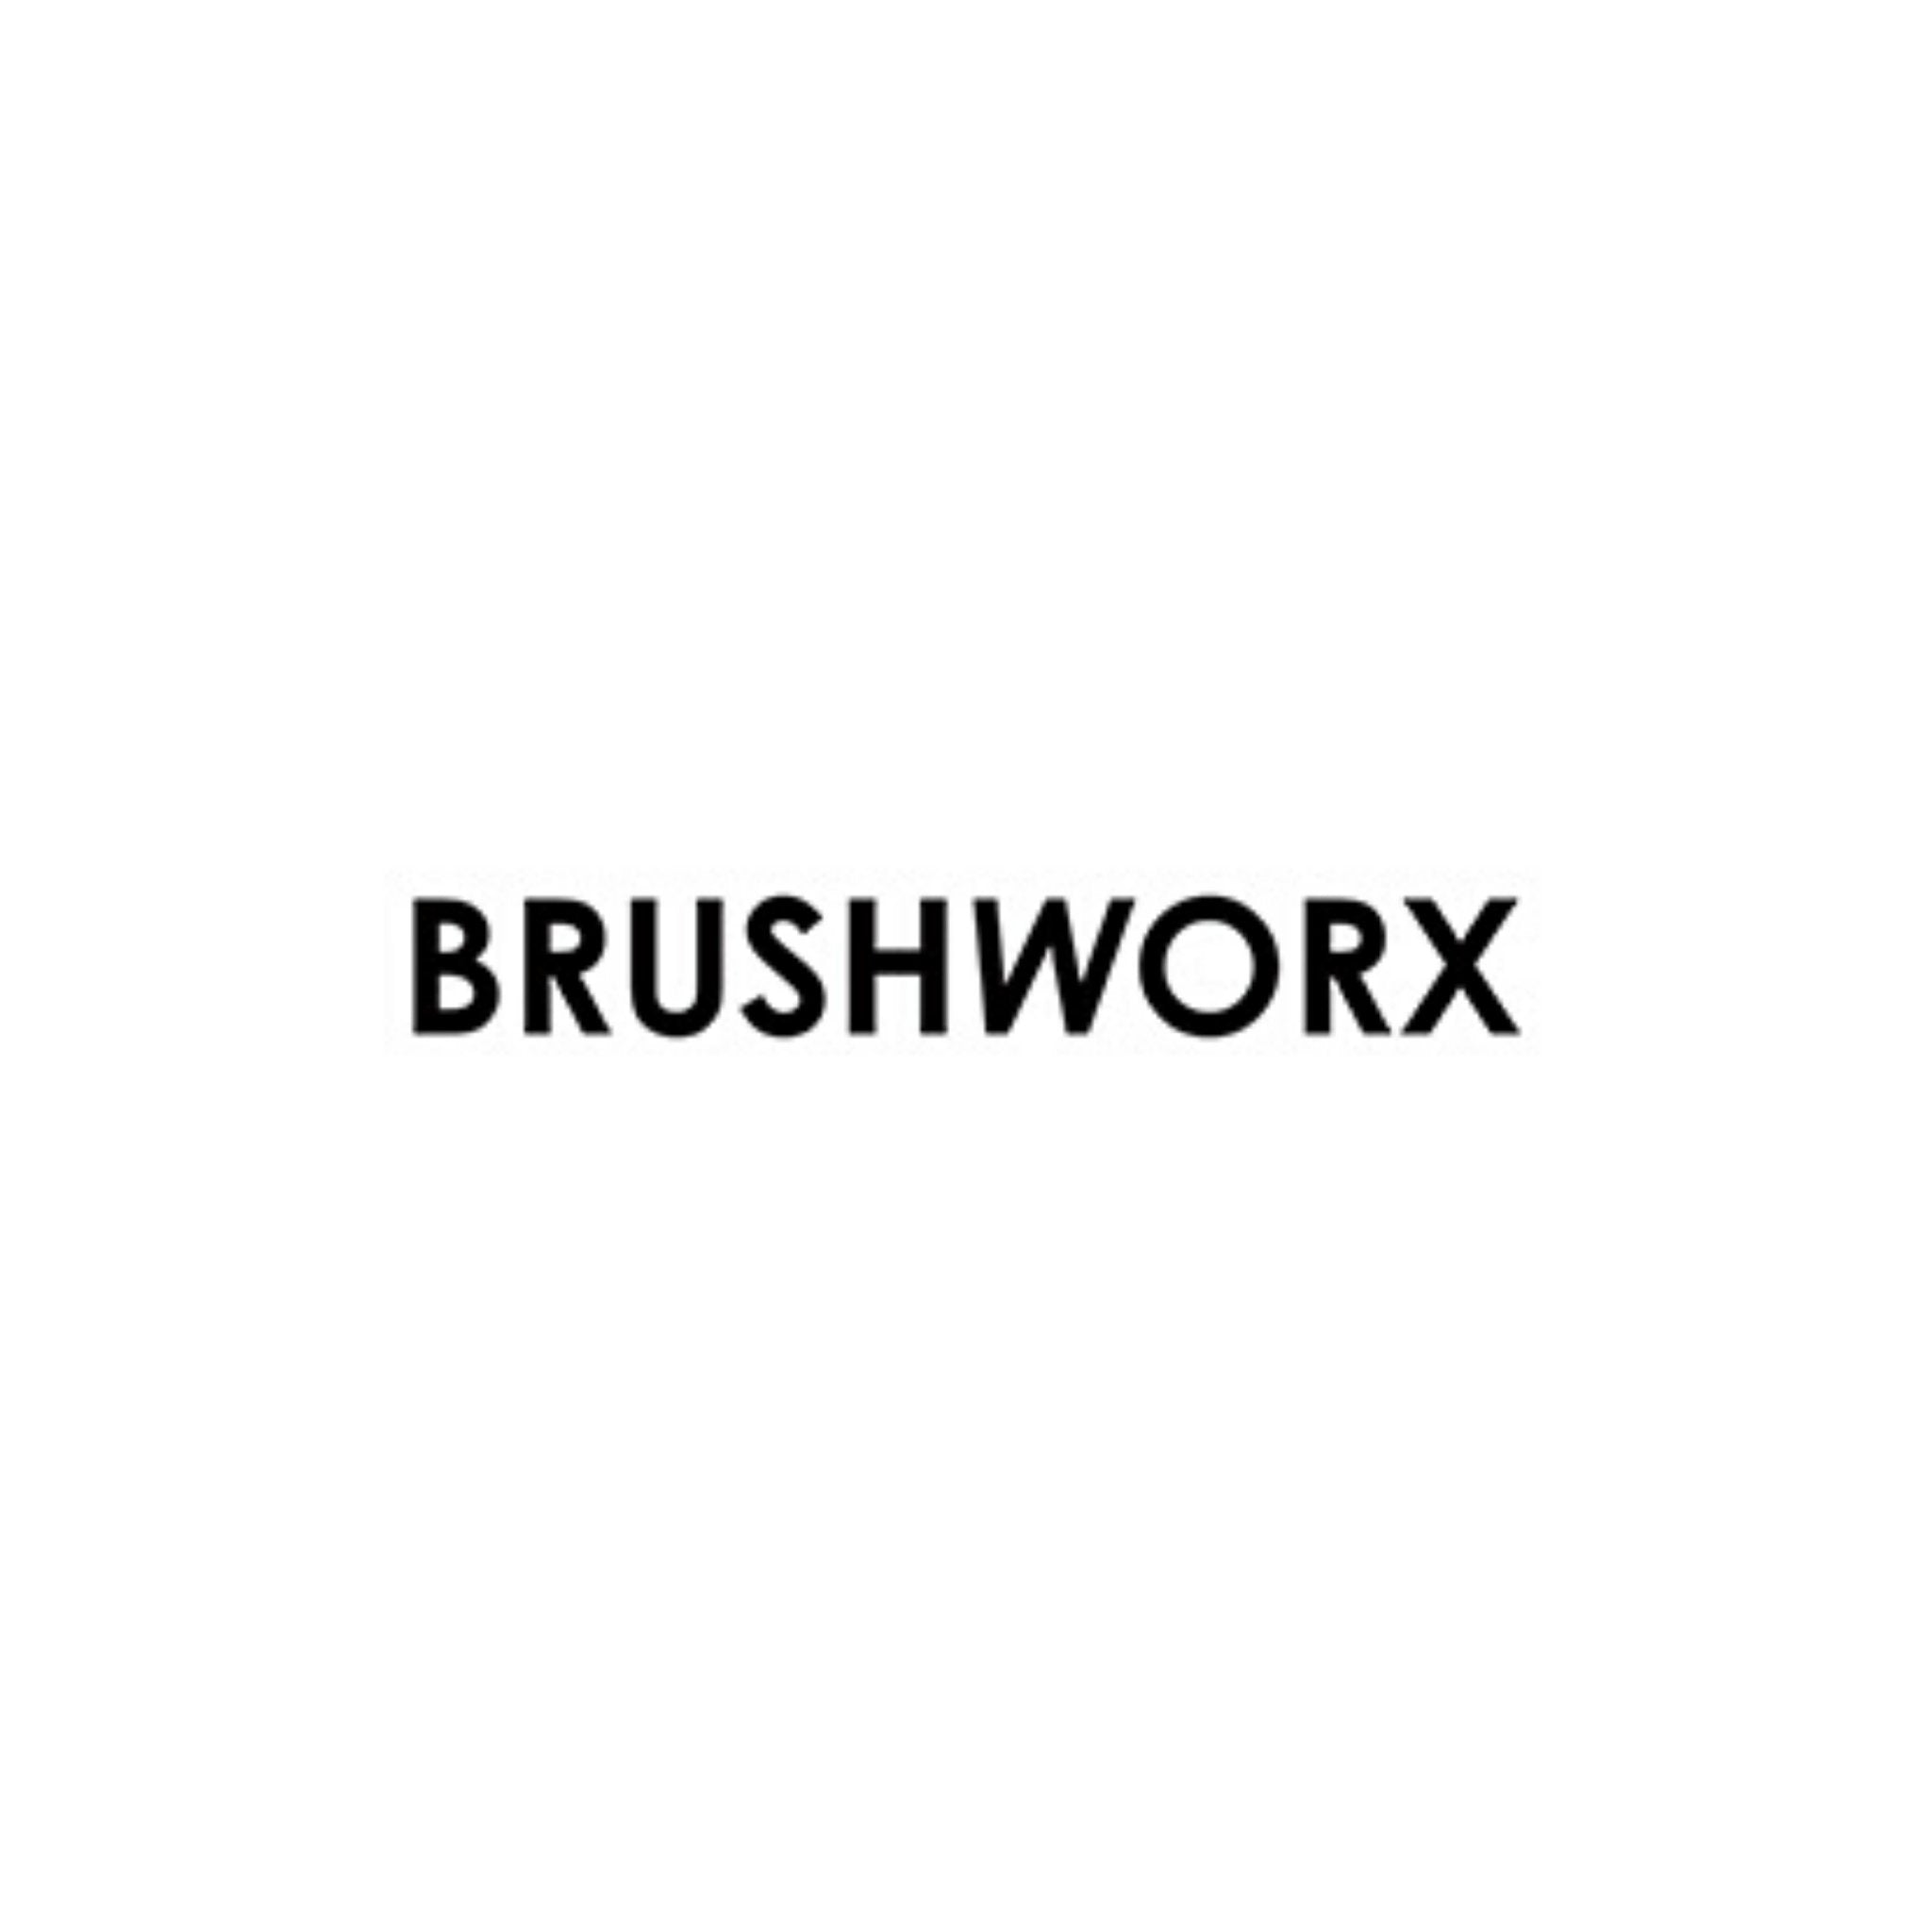 Brushworx - HairBeautyInk